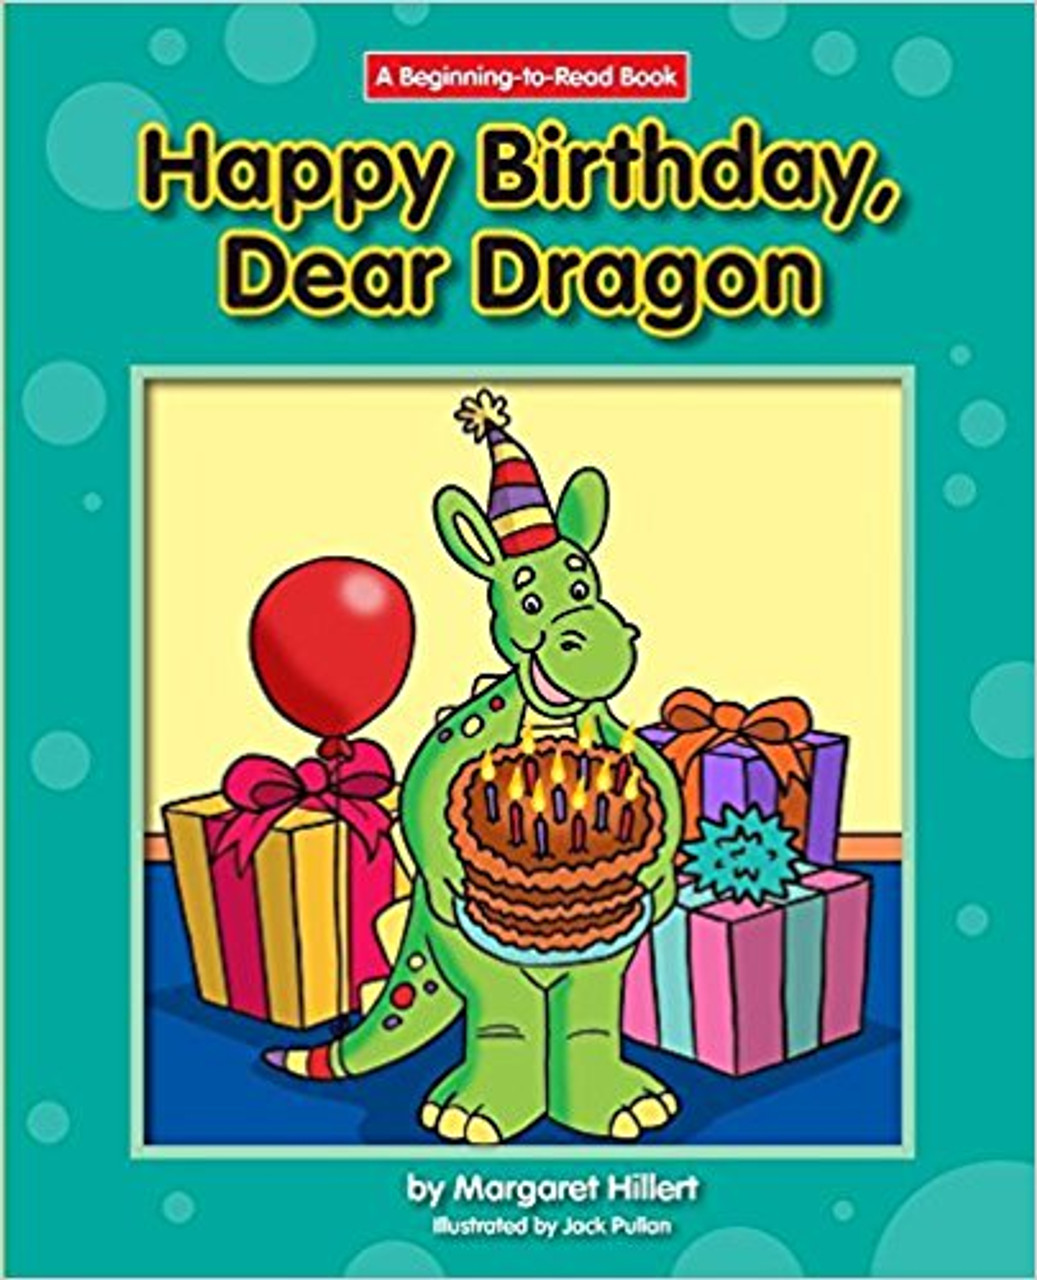 Happy Birthday, Dear Dragon by Margaret Hillert